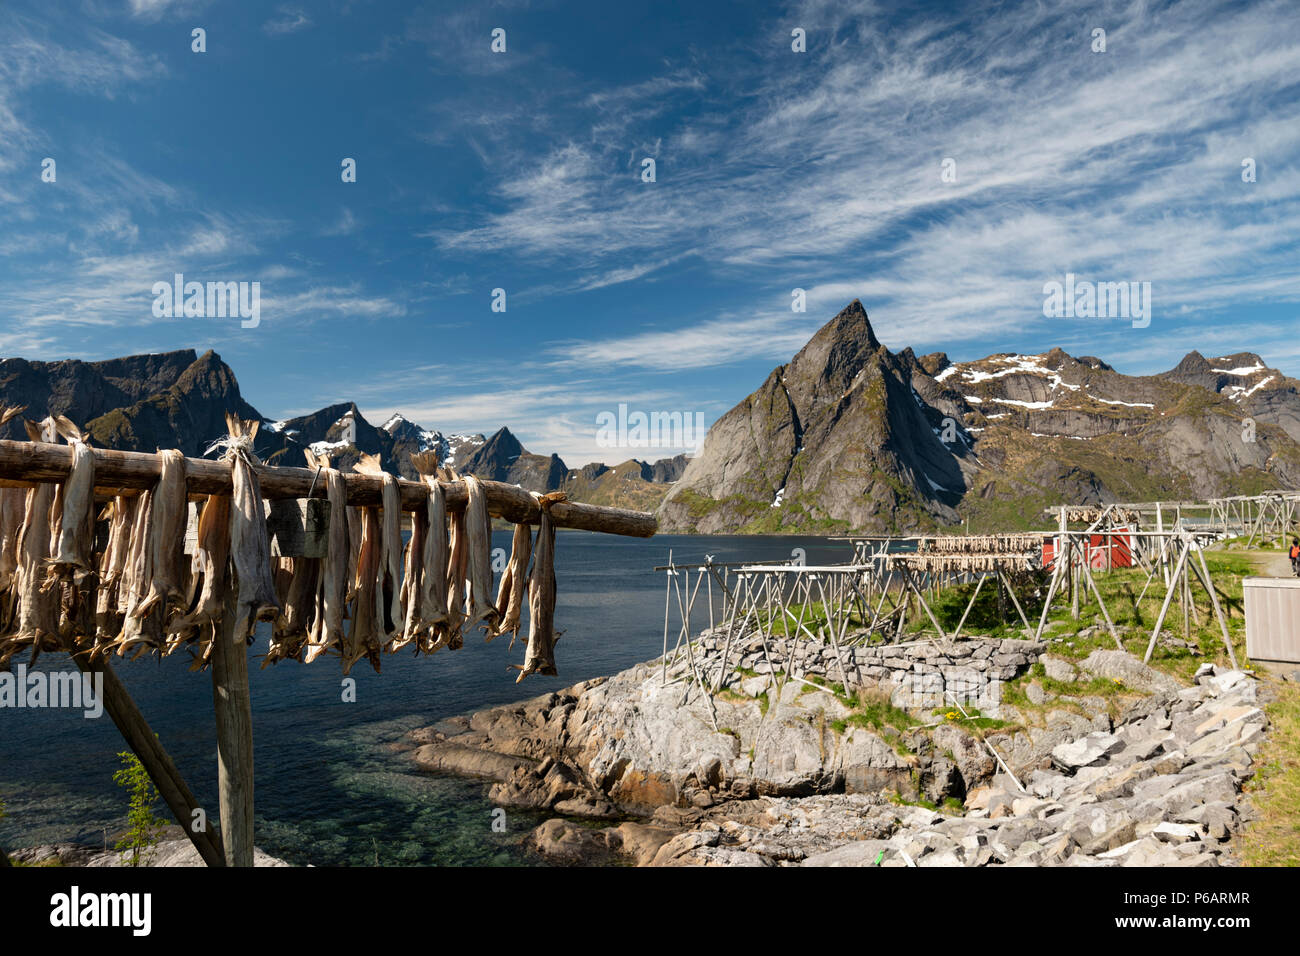 Essiccazione di pesce su scaffalature, Hamnoy, Isole Lofoten in Norvegia. Foto Stock